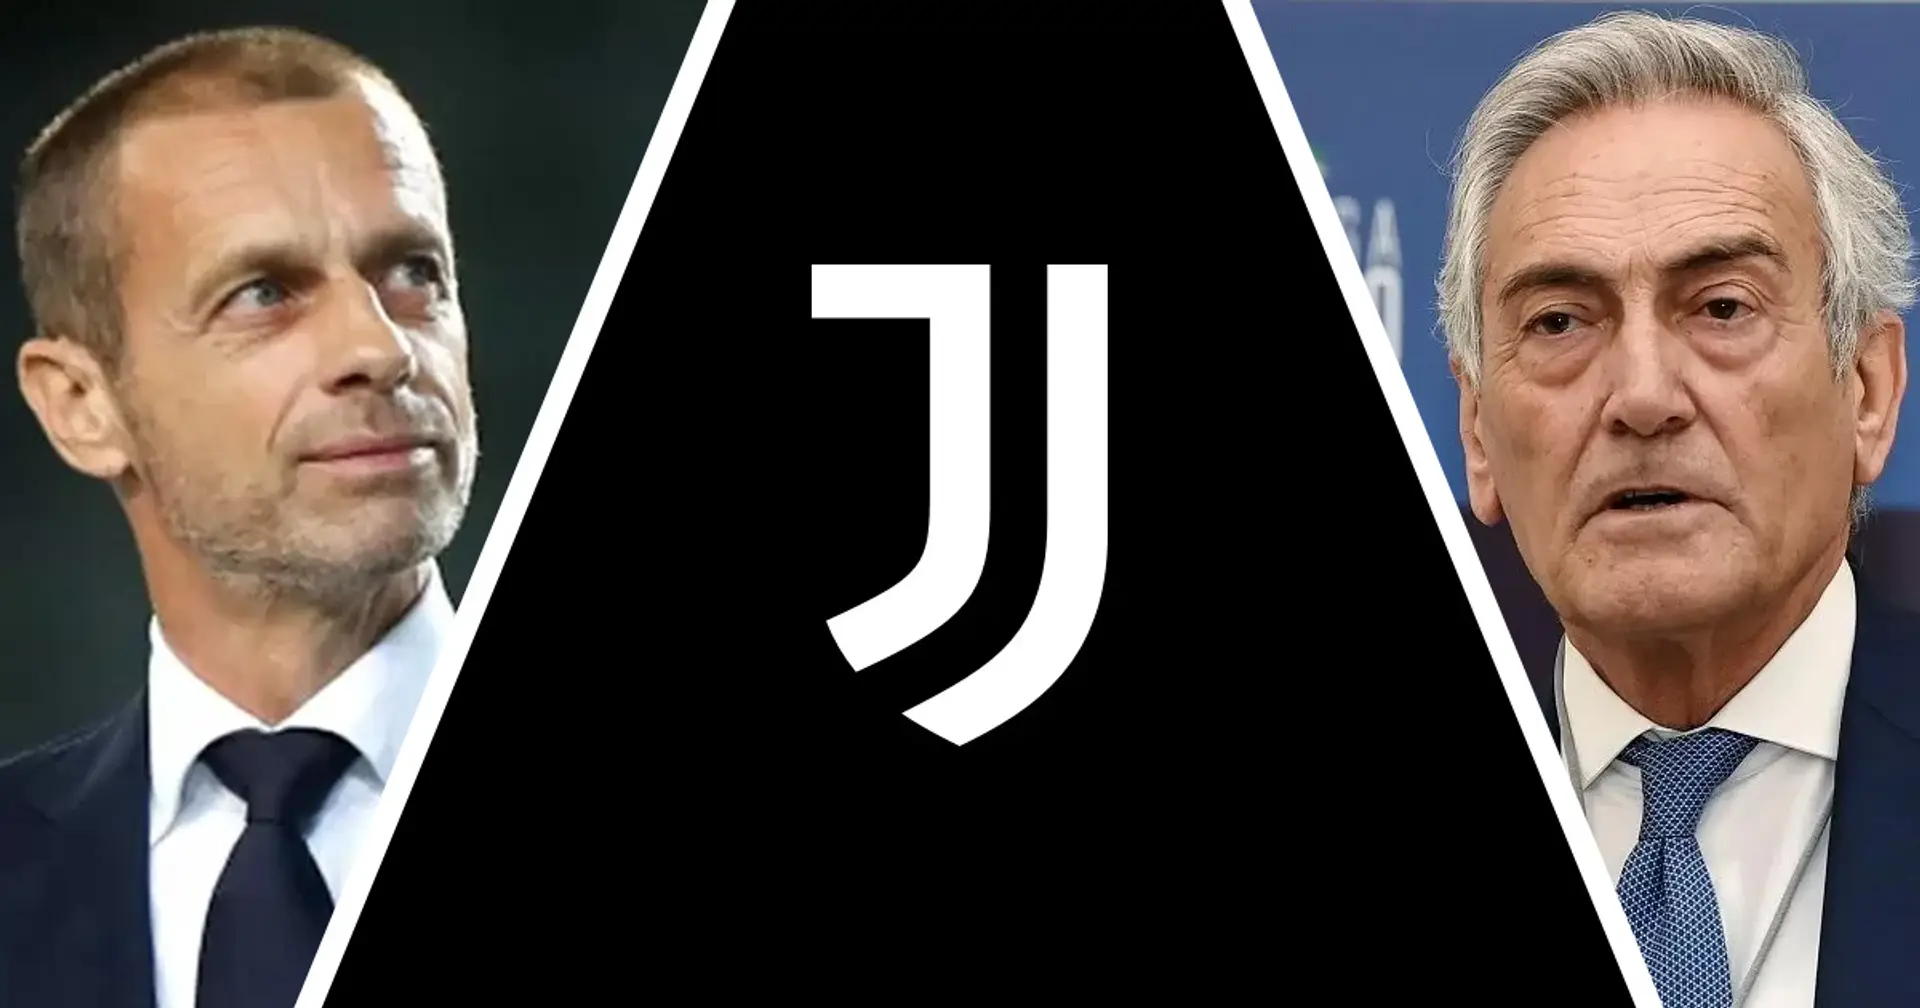 Faccia a faccia Ceferin-Gravina in finale di Europa League: l'UEFA arrabbiata per le sentenze alla Juventus